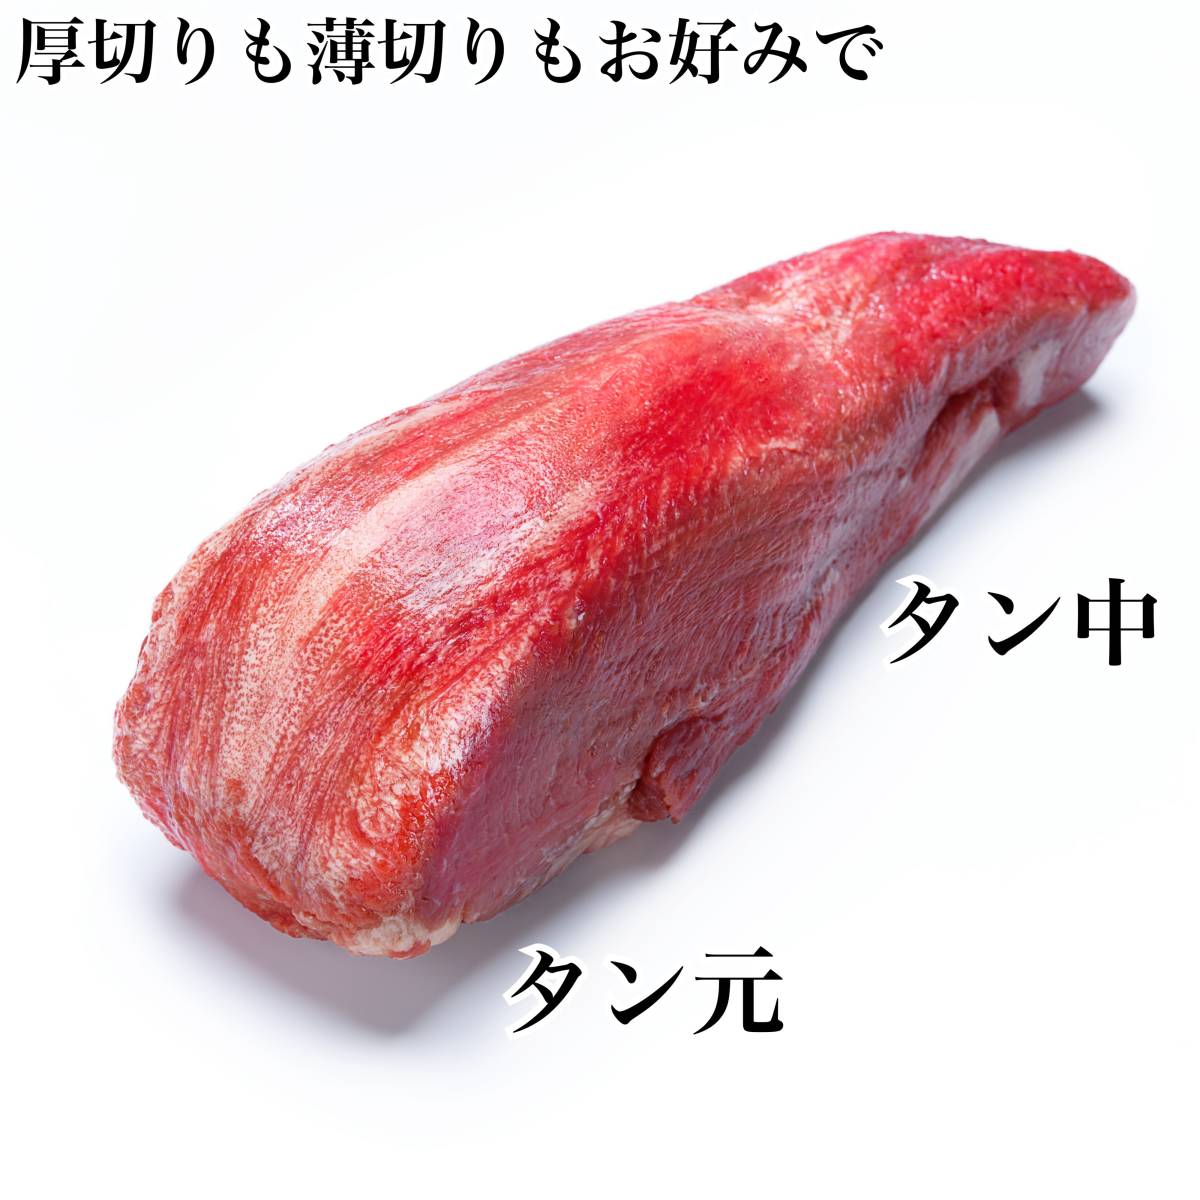  cow mki tongue block 2 pcs set (1200g) business use yakiniku BBQ steak prompt decision nikomi . meat cow tongue cow .. beef cow tongue block 